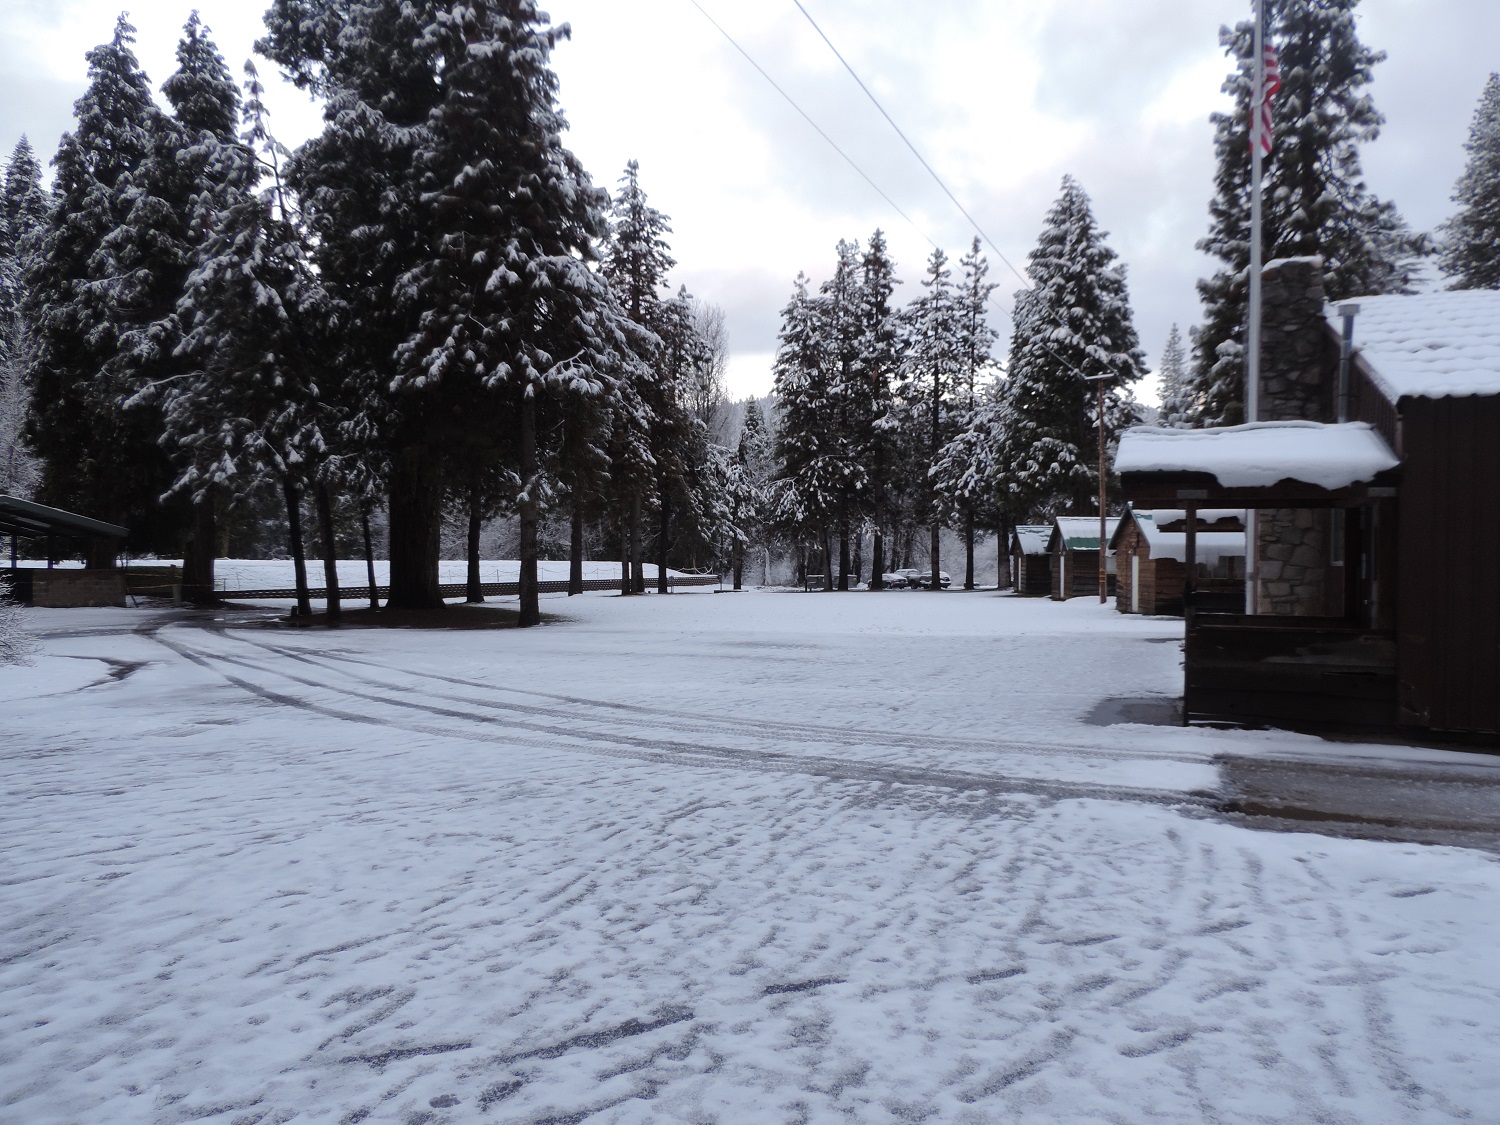 Green Meadows 2014 - snow on the ground - photos courtesy of Ronda Clarke